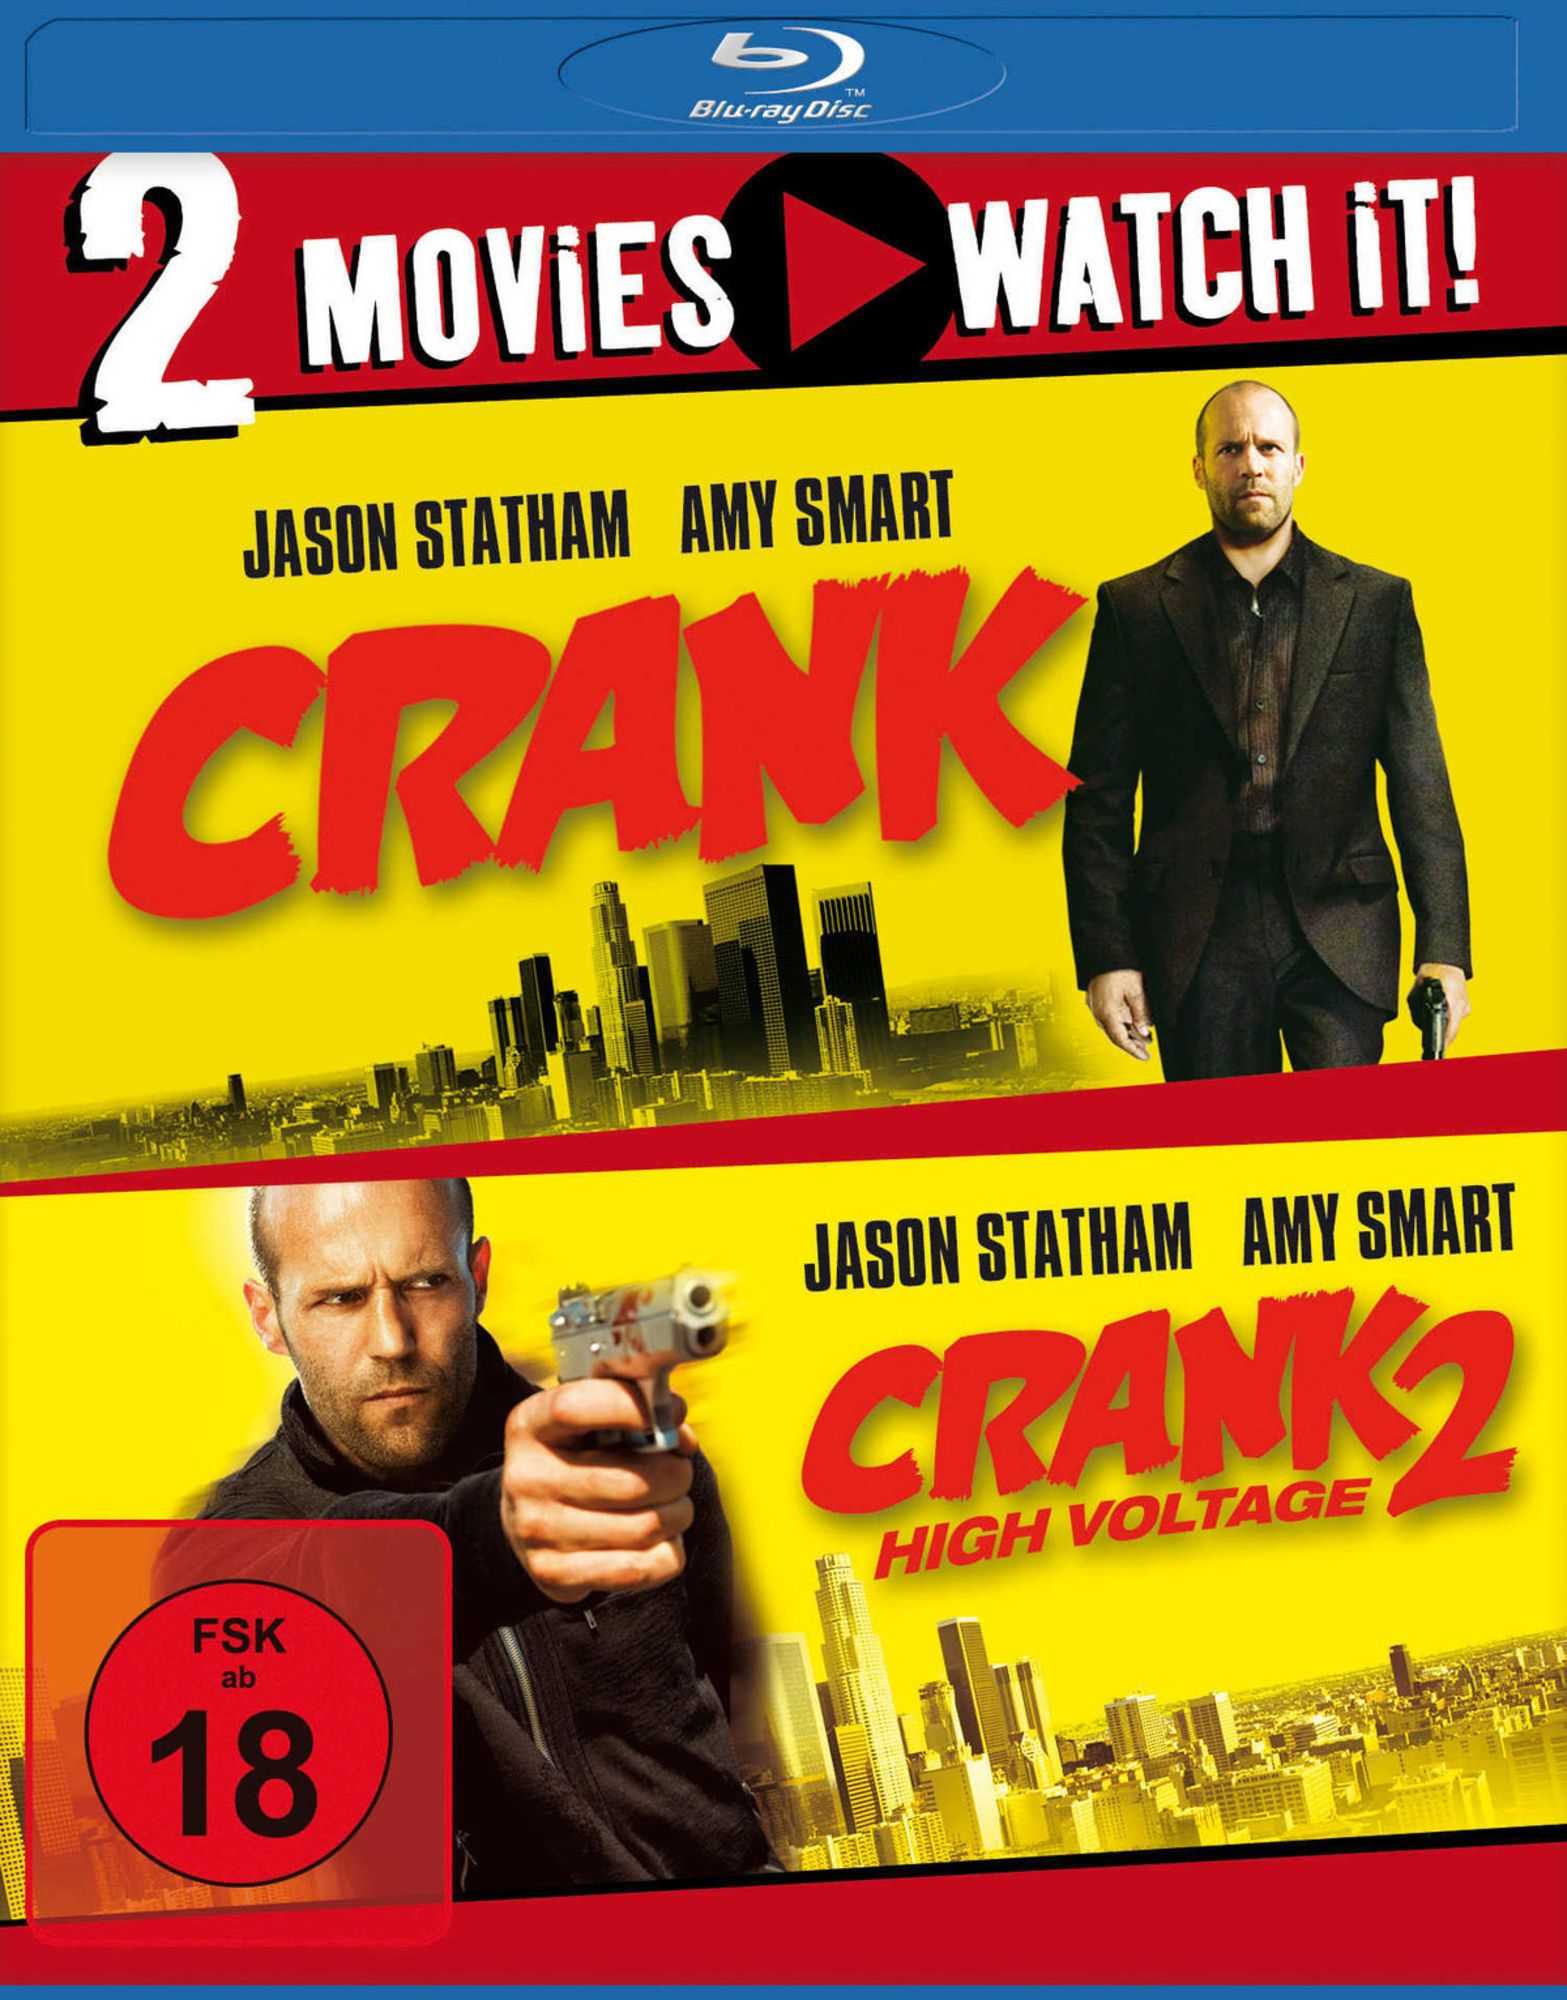 Crank 1&2 [2 BRs]' von 'Mark Neveldine' - 'Blu-ray